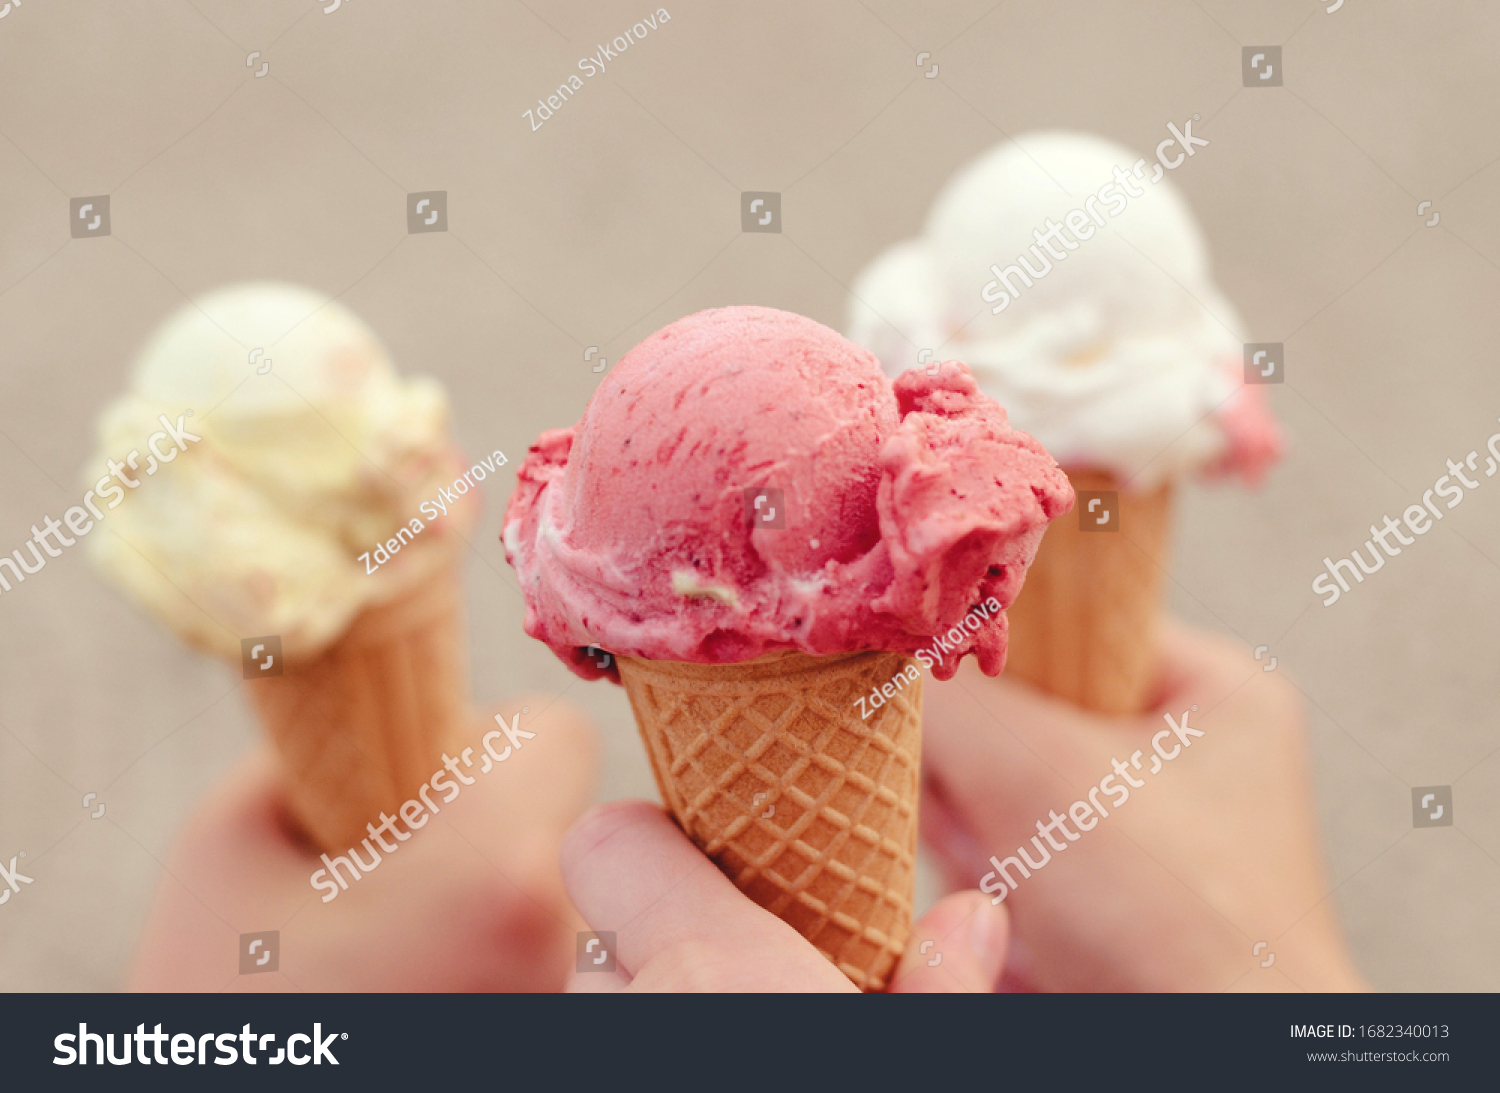 Three cornets of ice cream - strawberry, vanilla, lemon #1682340013